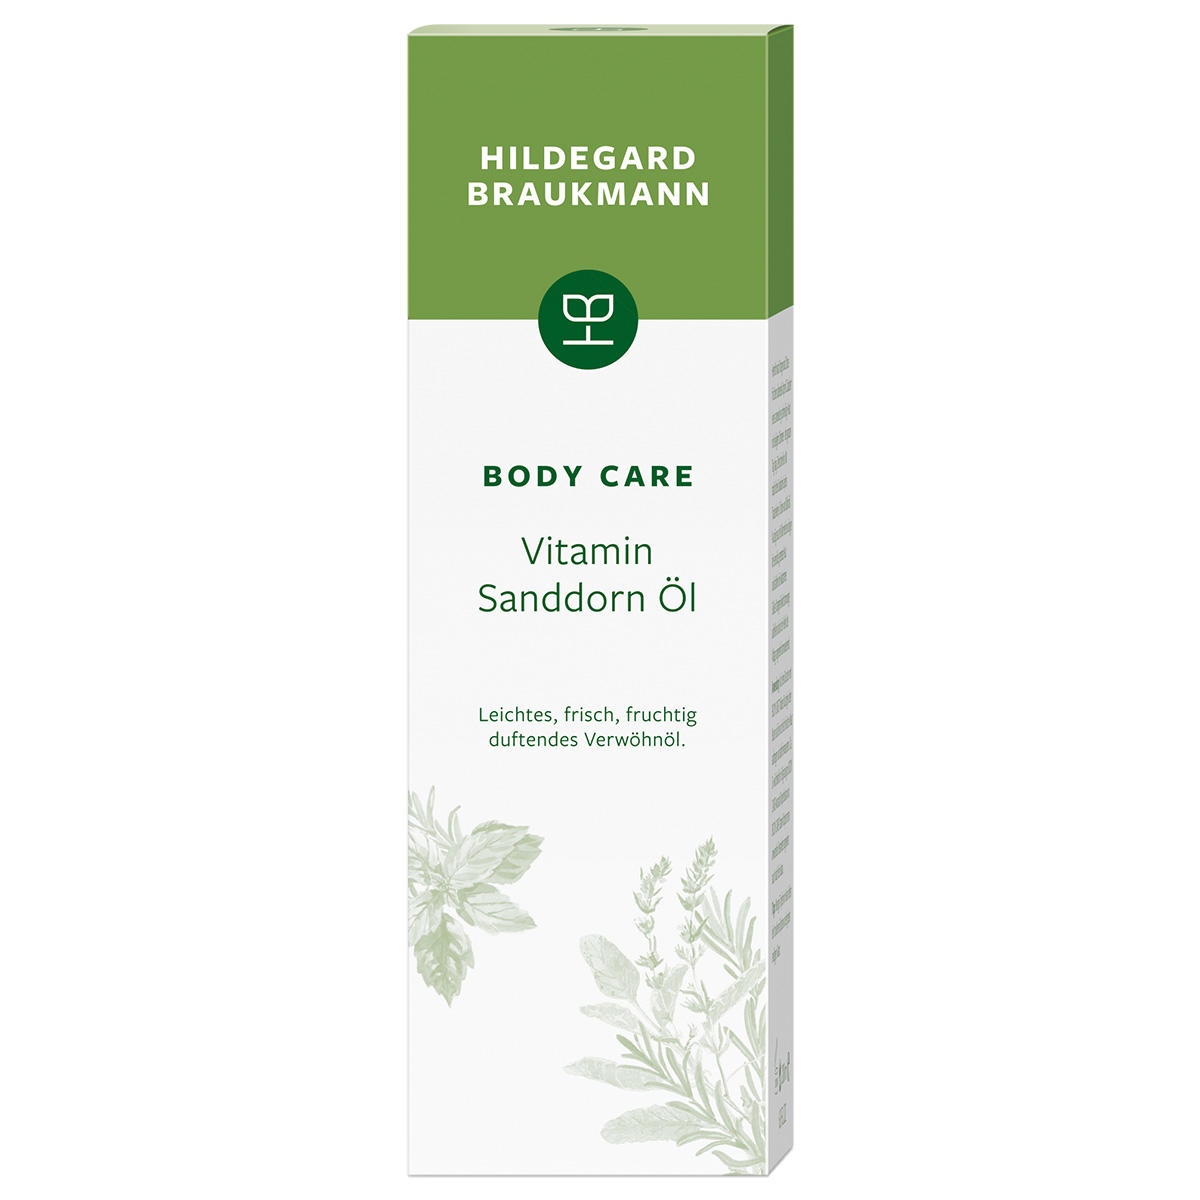 Hildegard Braukmann BODY CARE Vitamin Sanddorn Öl 200 ml - 2